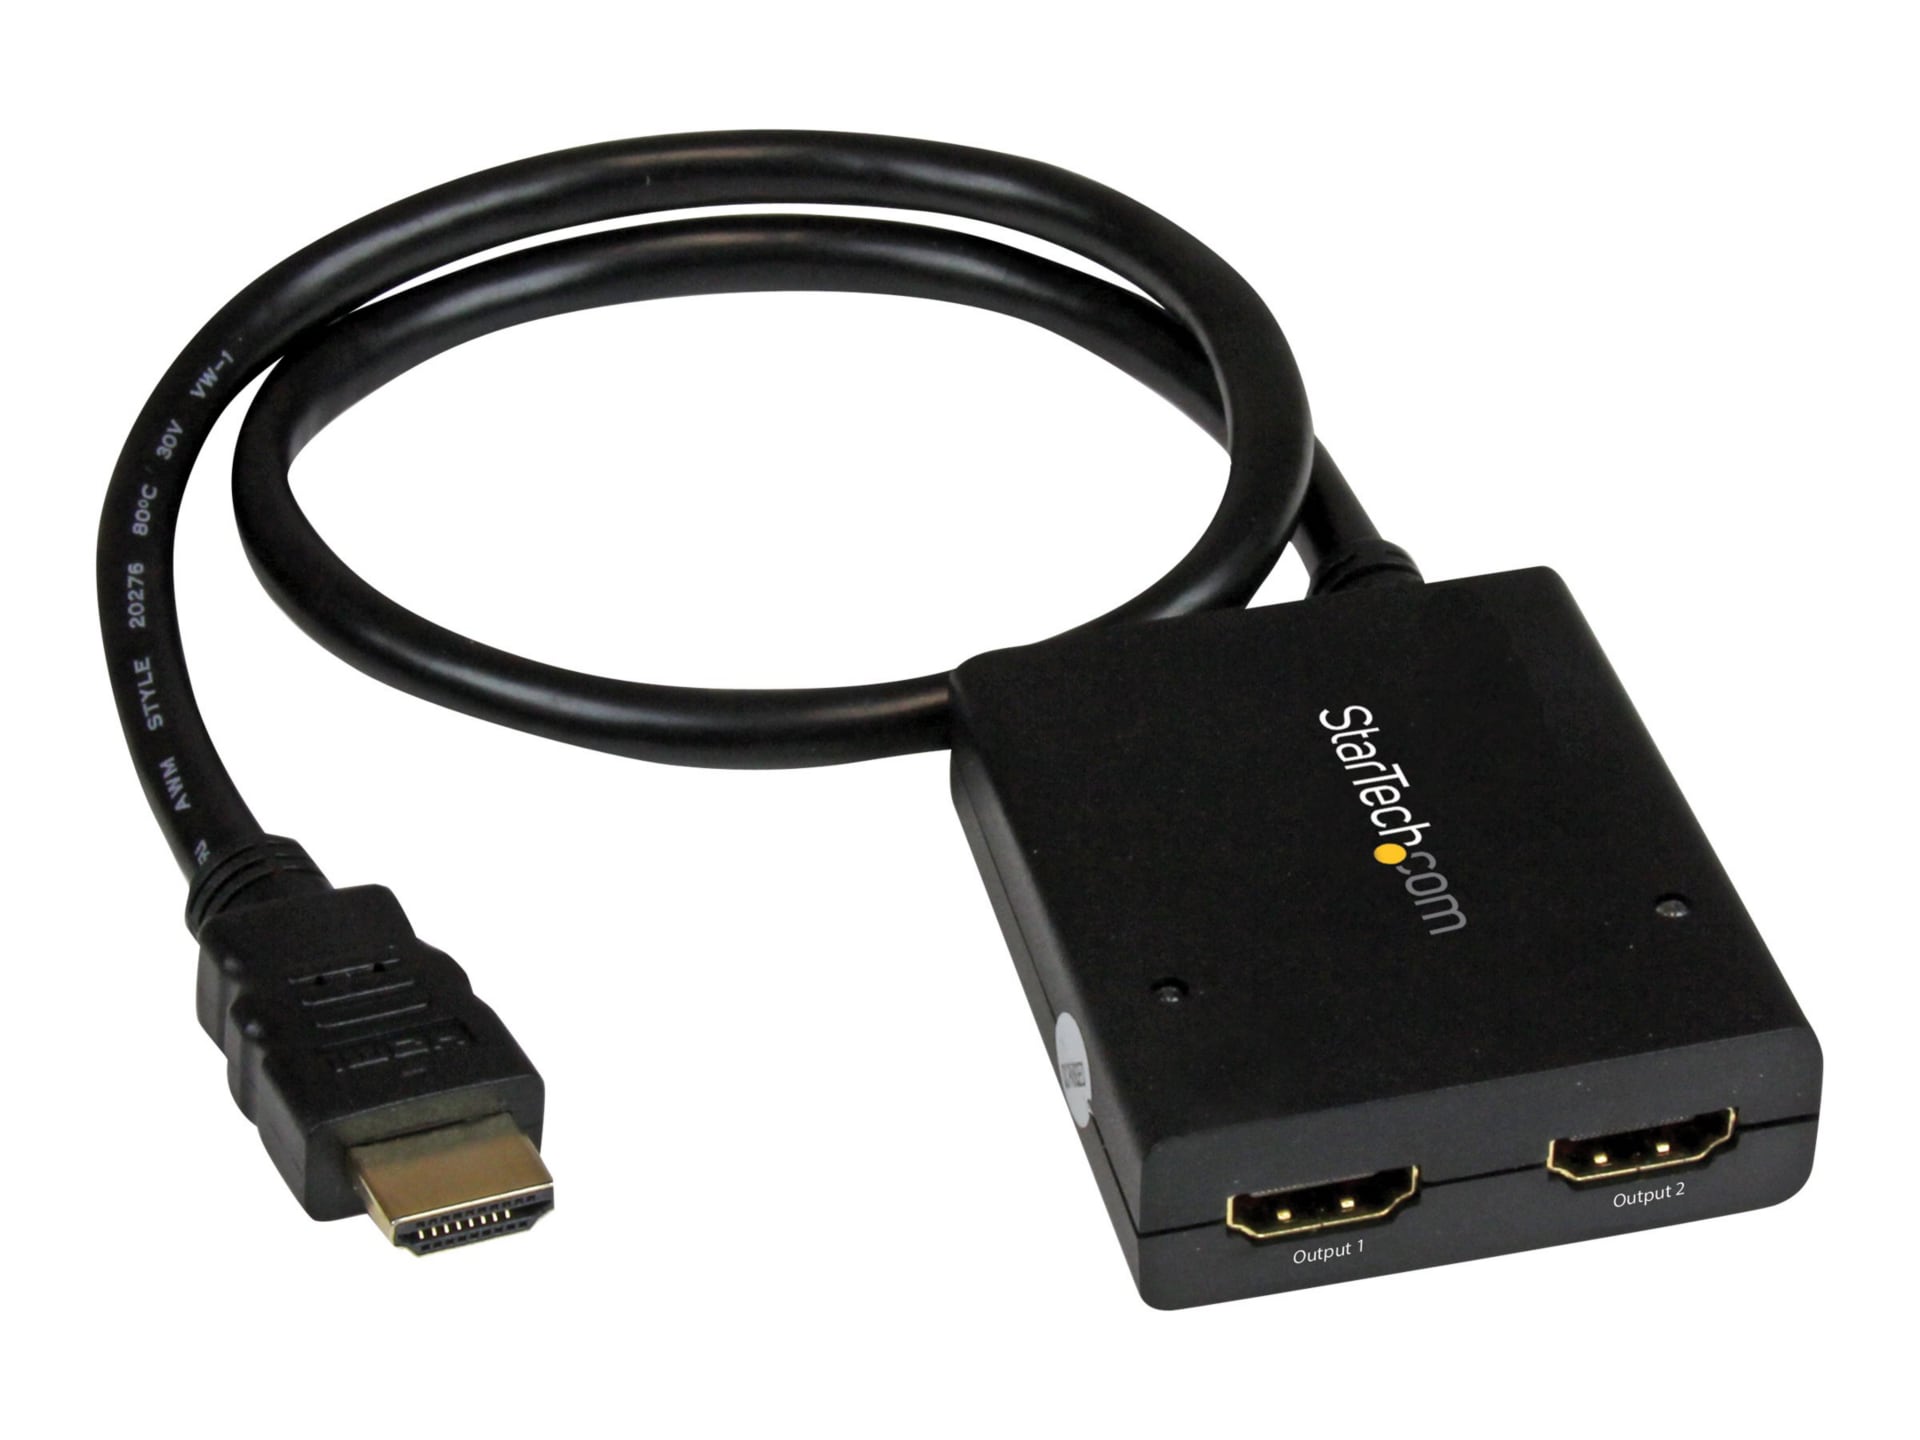 URICOM HDMI SPLITTER 2 PORT 4K WITH ADAPTOR